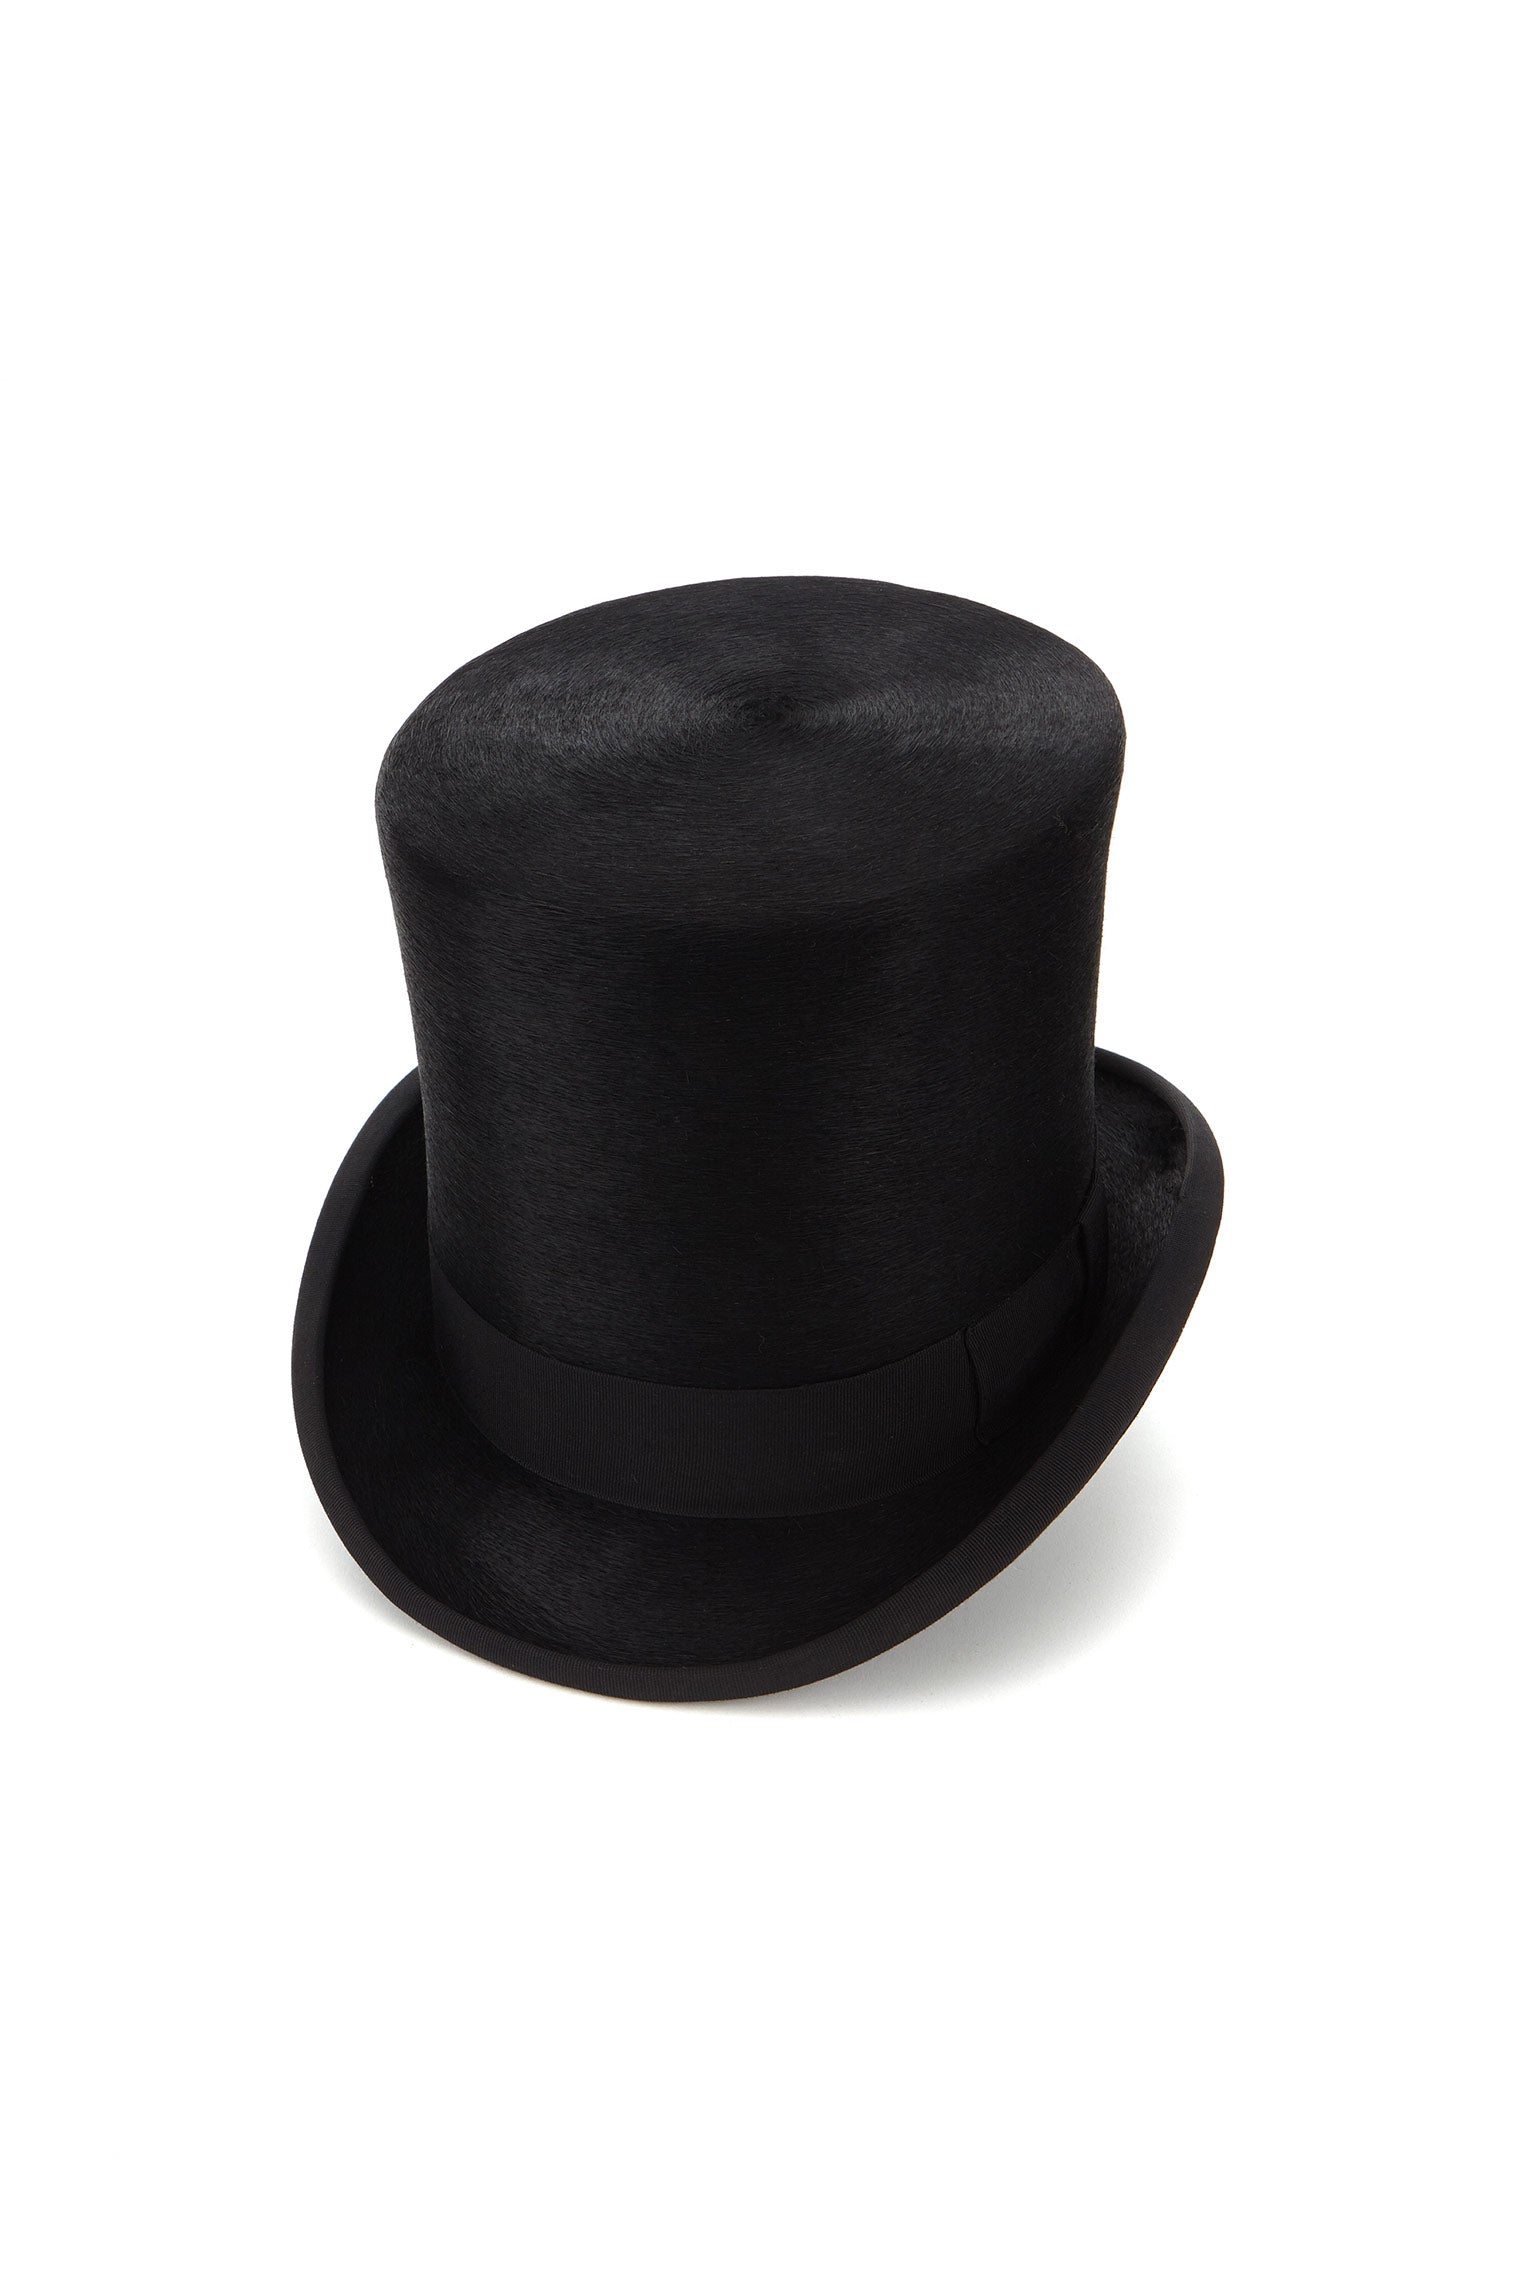 Westminster High Crown Top Hat - Men's Hats - Lock & Co. Hatters London UK